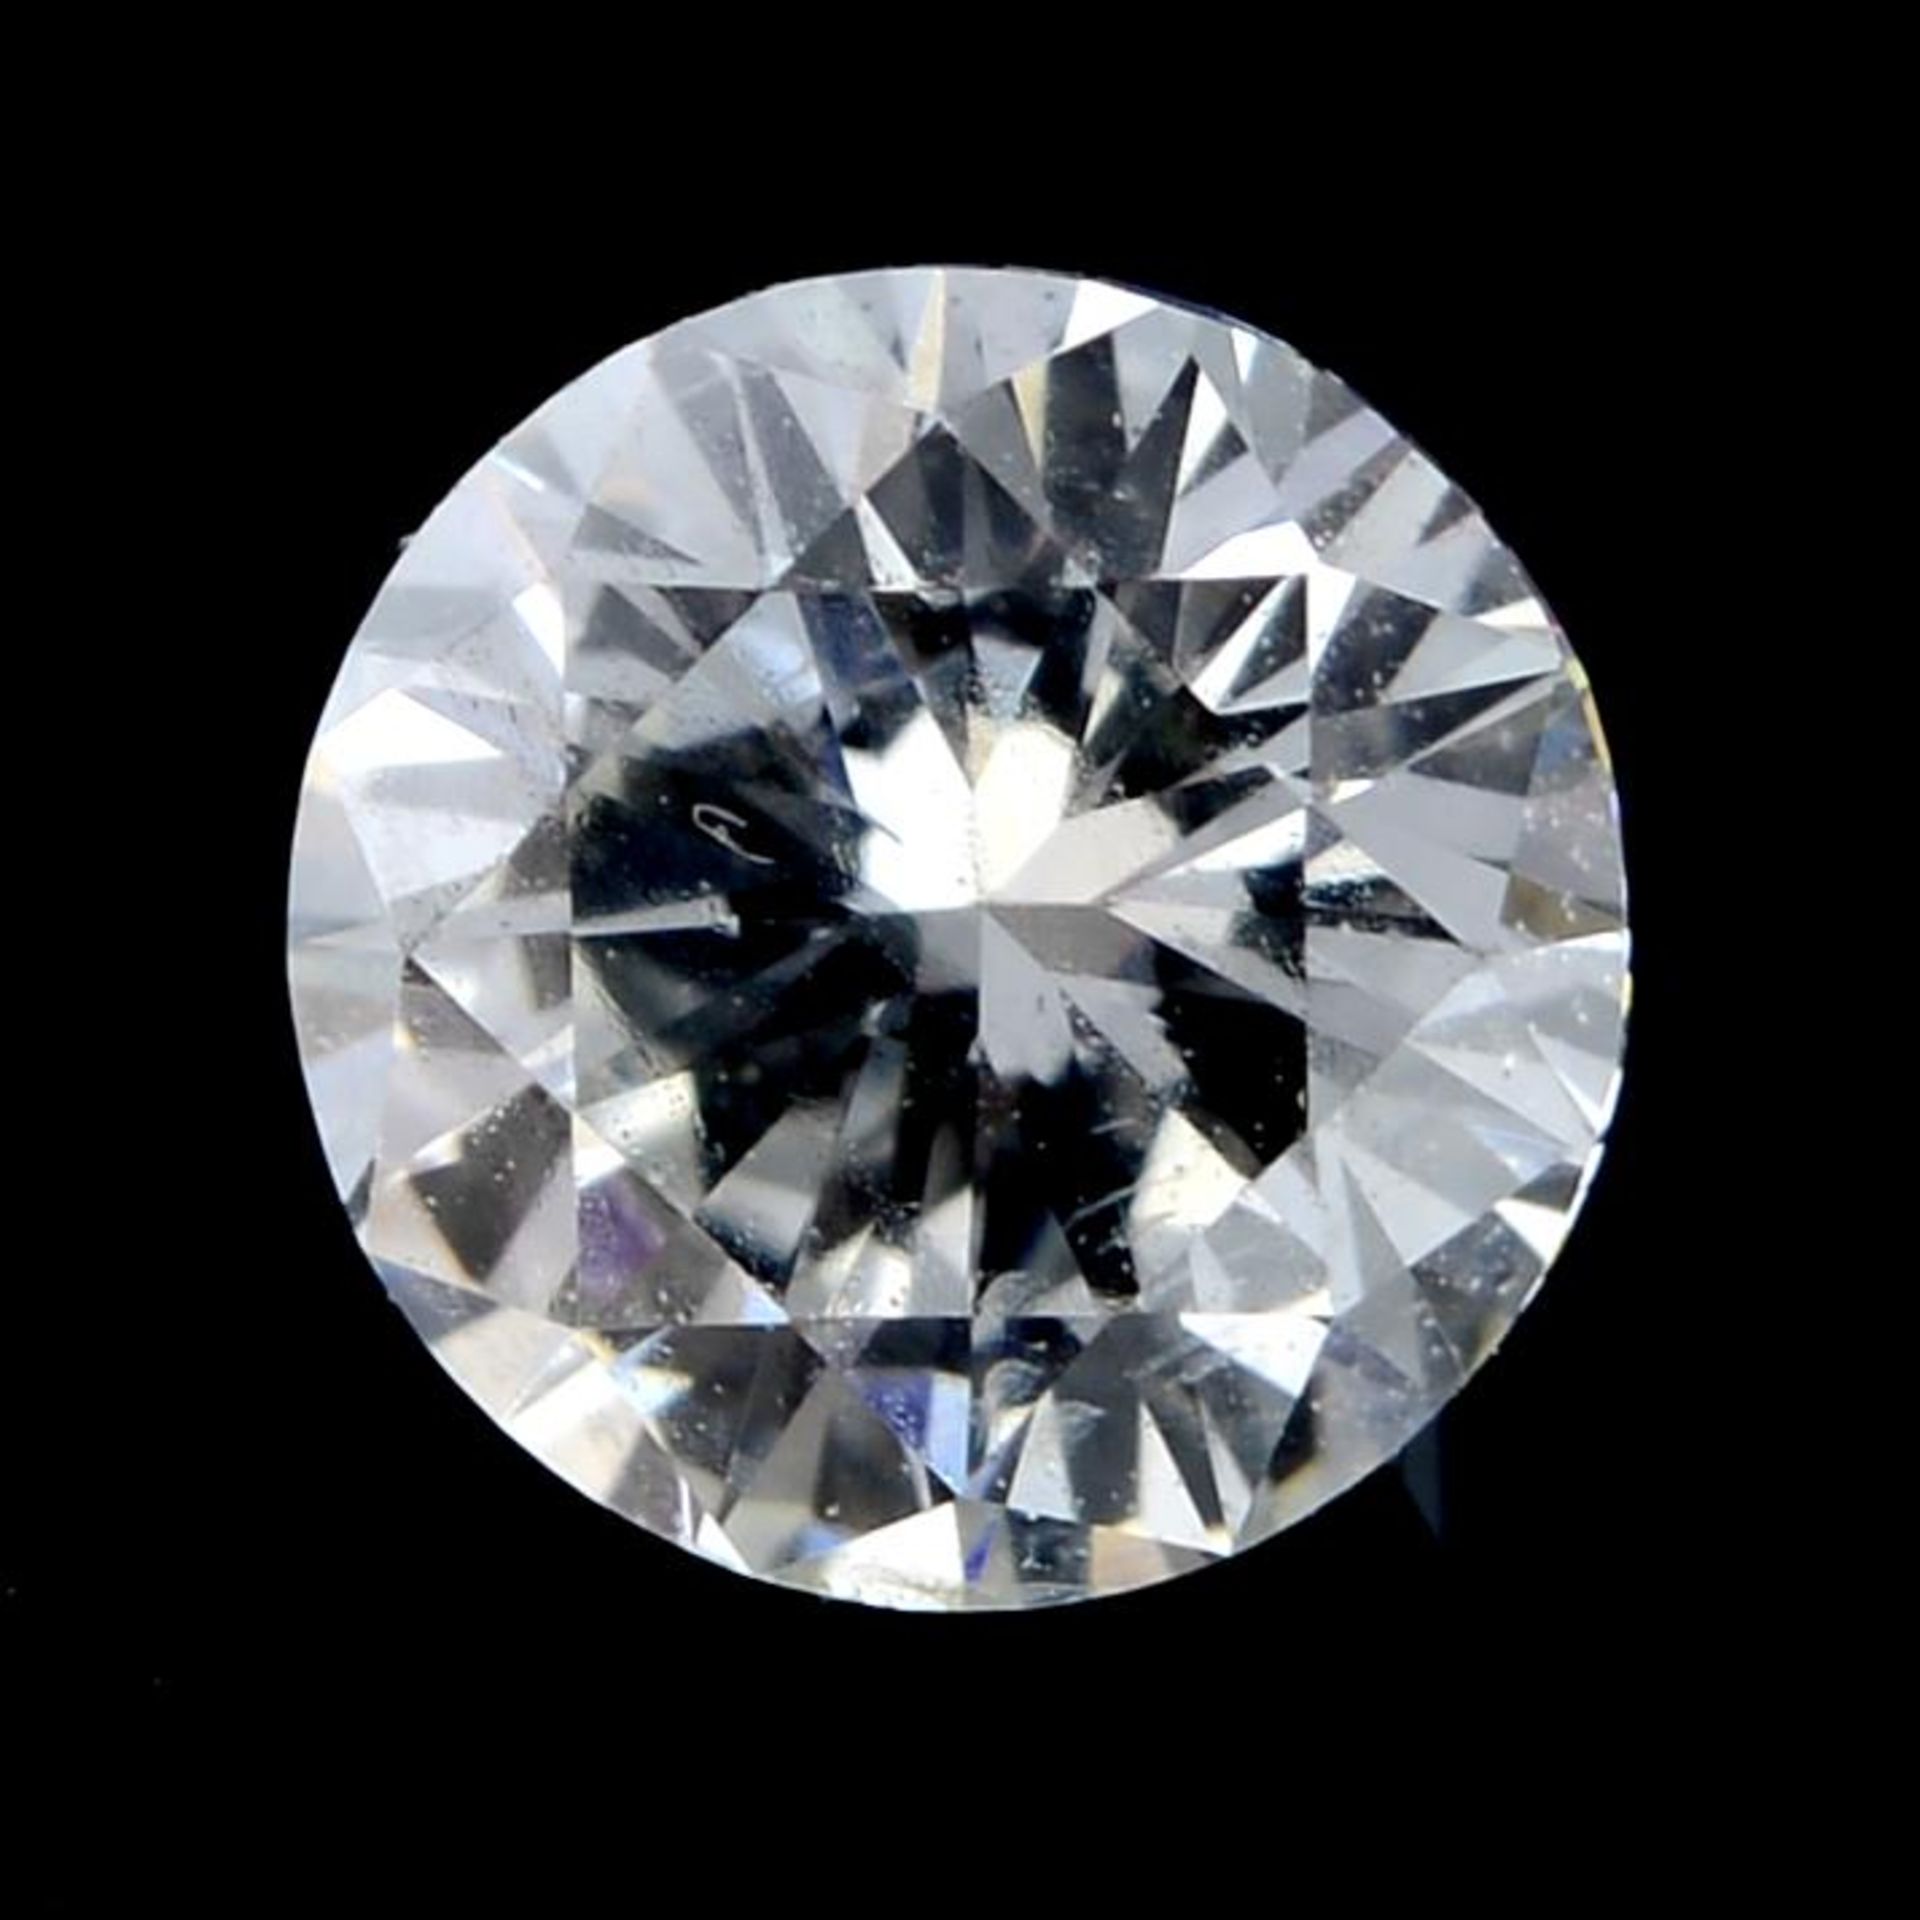 A brilliant cut diamond weighing 0.37ct.